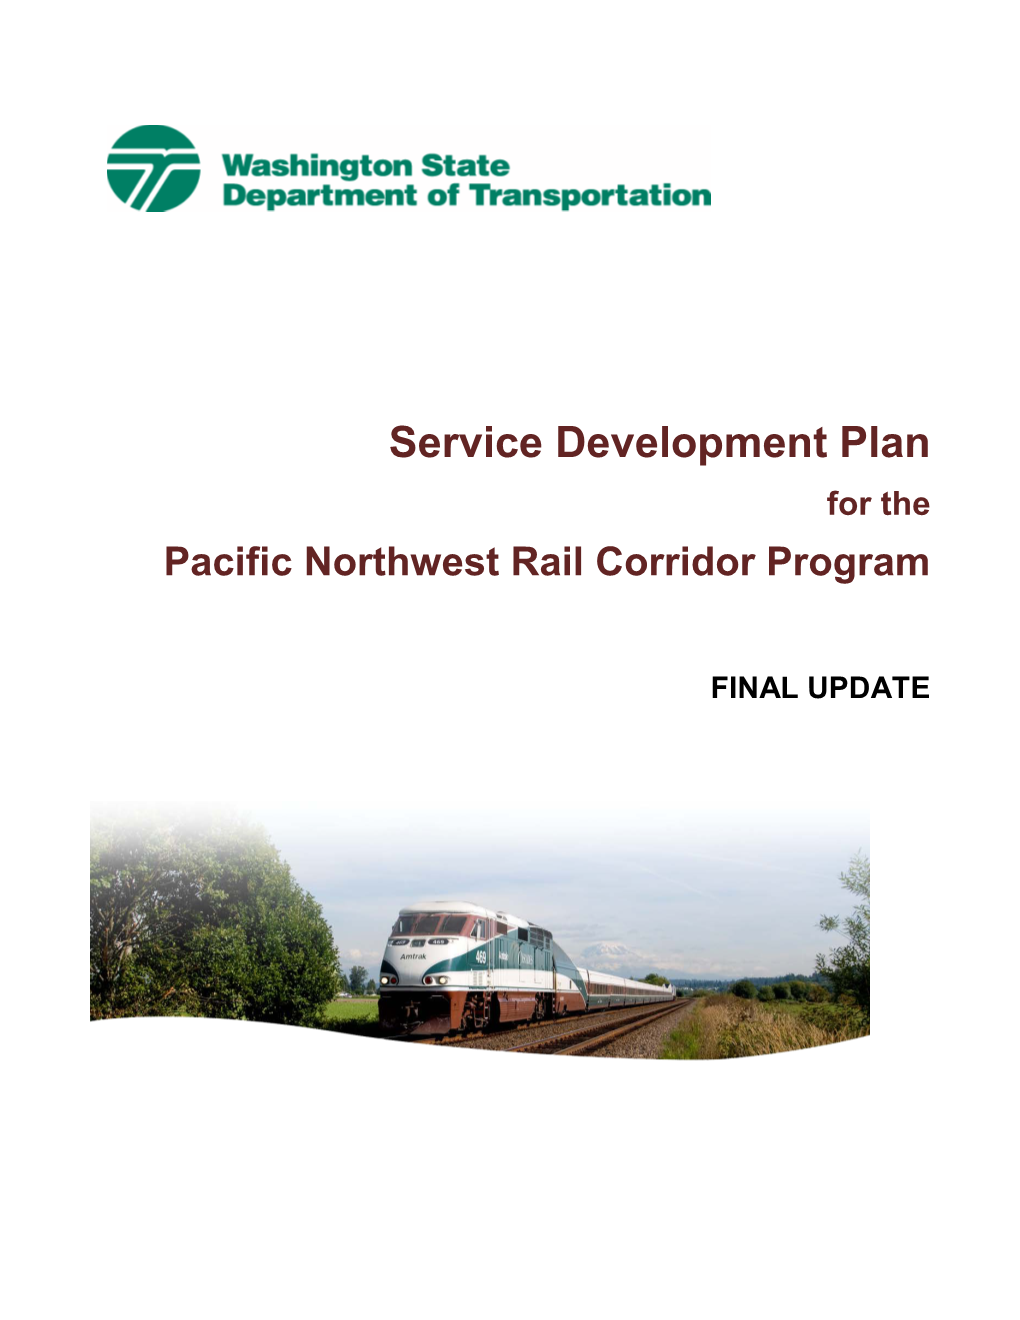 Service Development Plan for the Pacific Northwest Rail Corridor Program